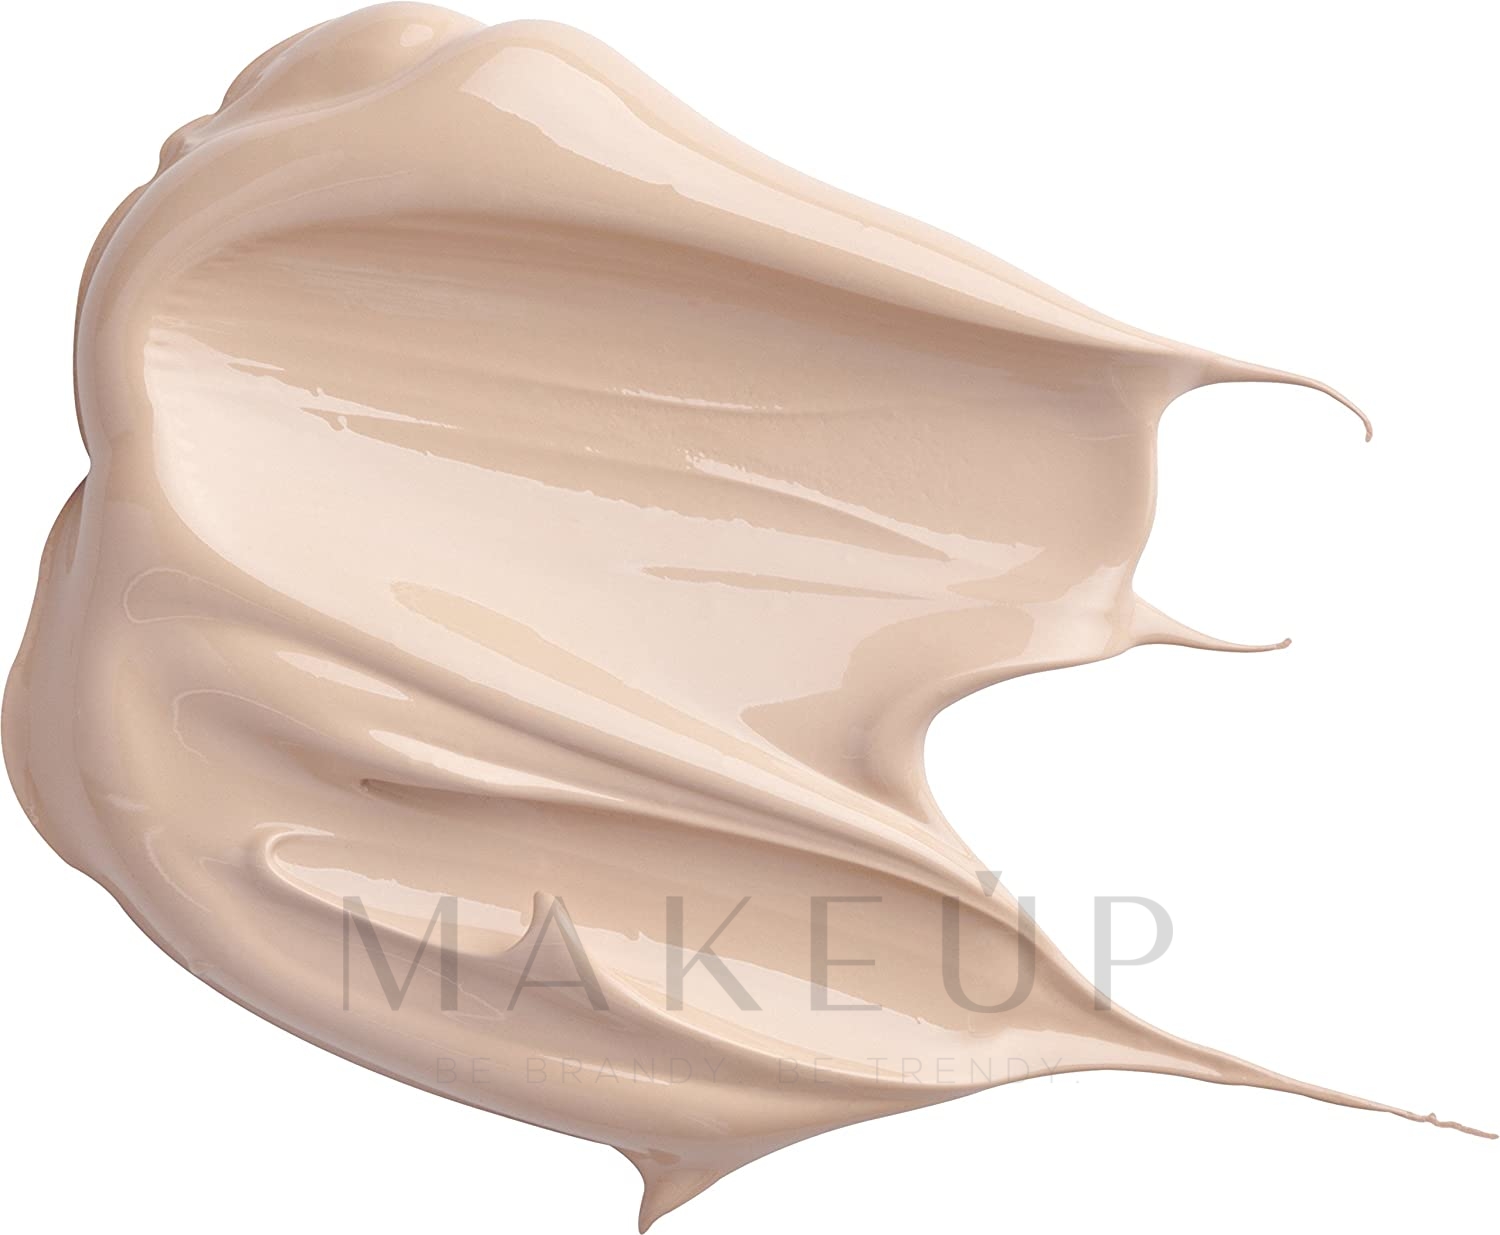 CC Gesichtscreme SPF 30 - Beauty UK CC Cream SPF 30 — Bild 10 - Natural